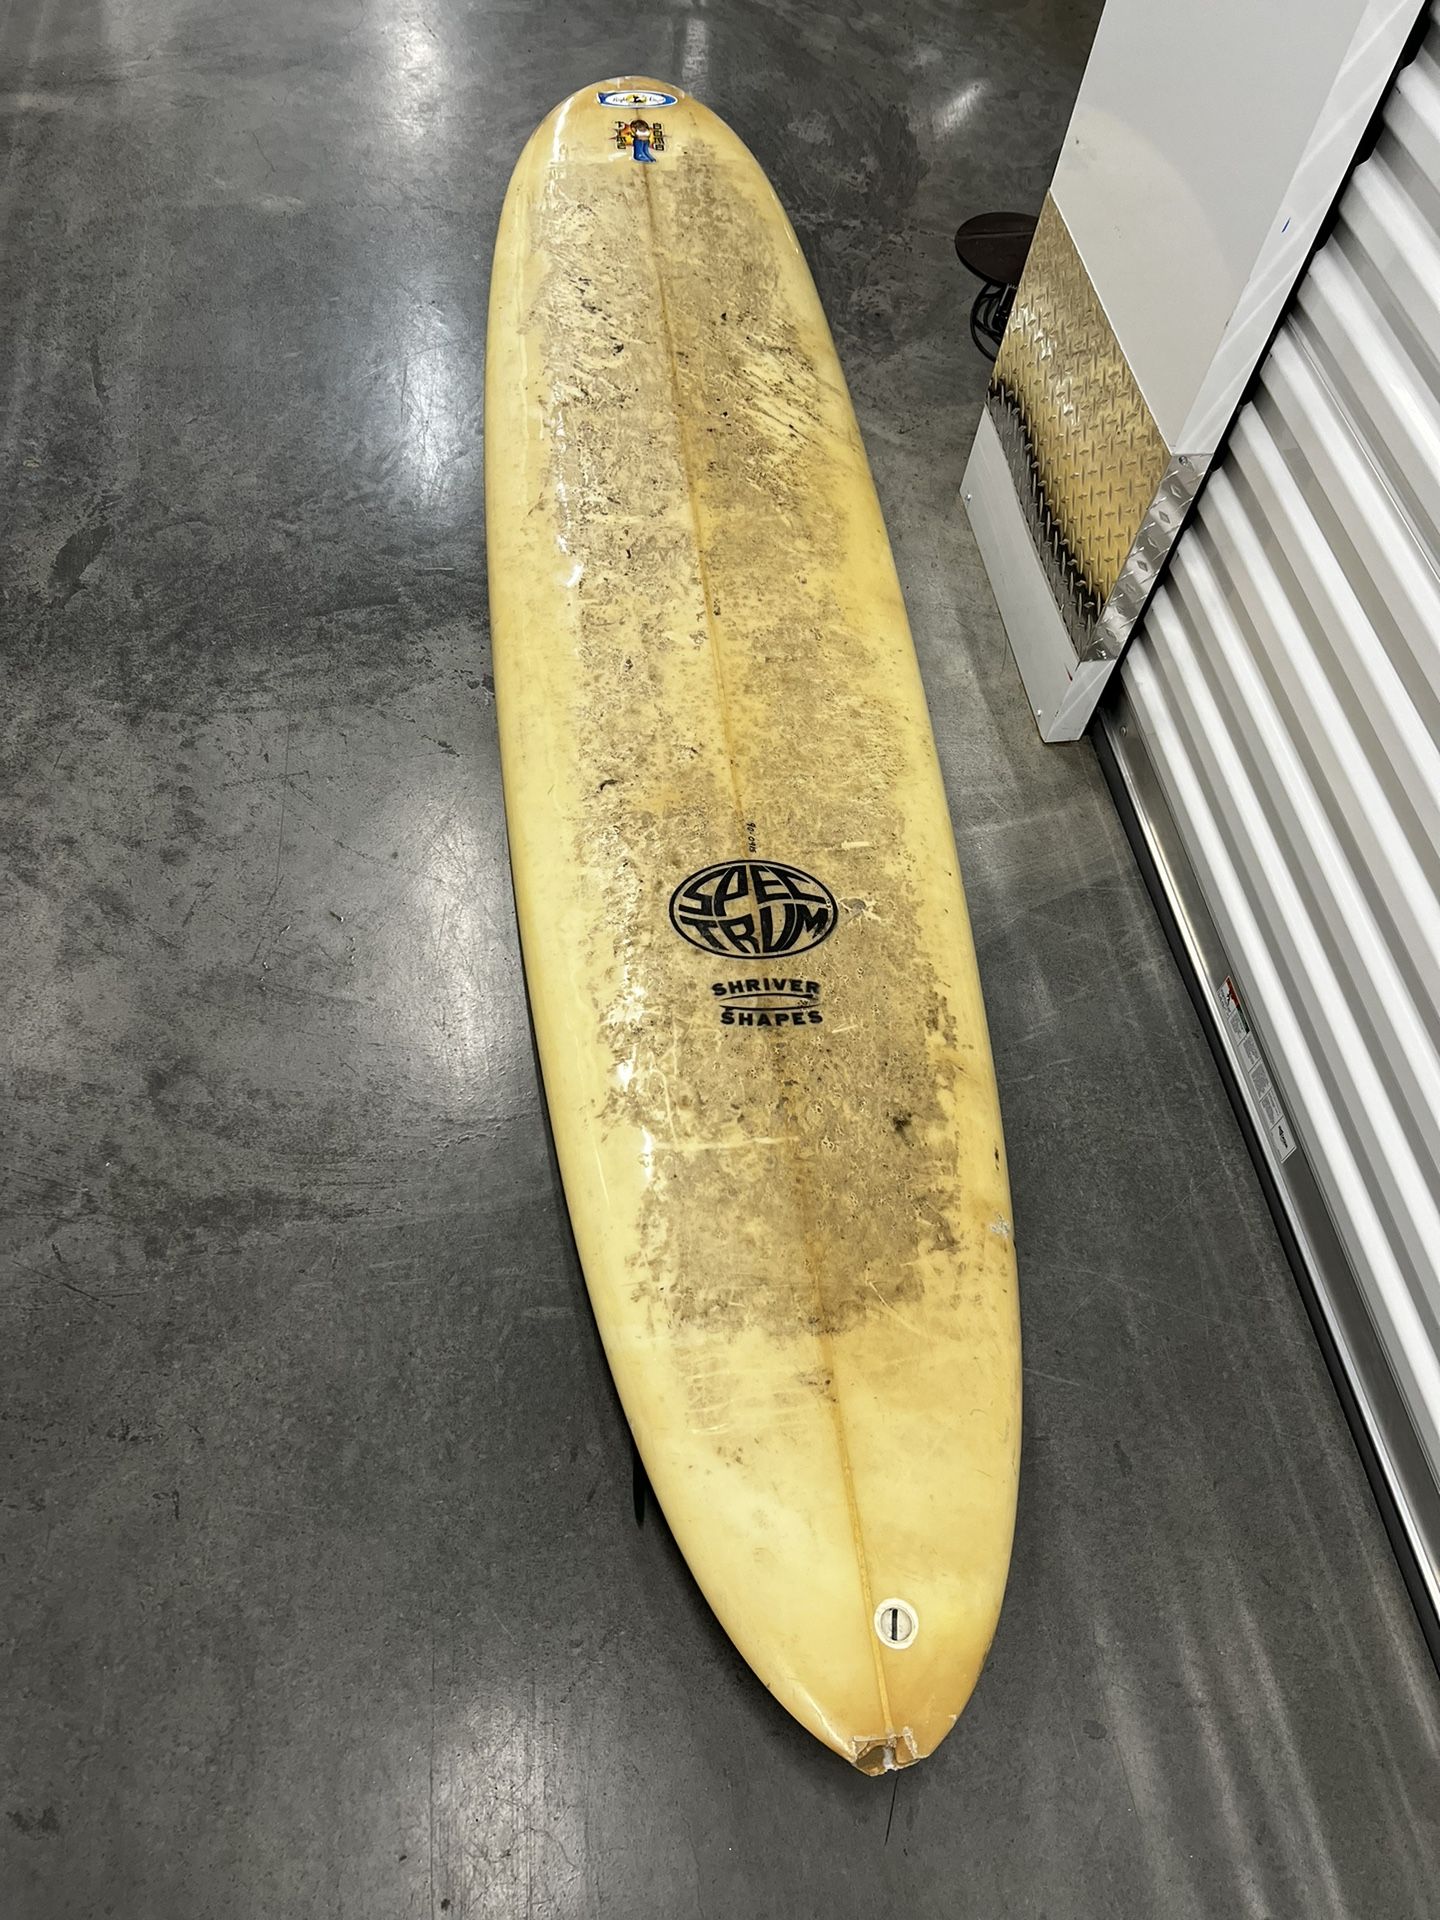 9 Foot Surfboard